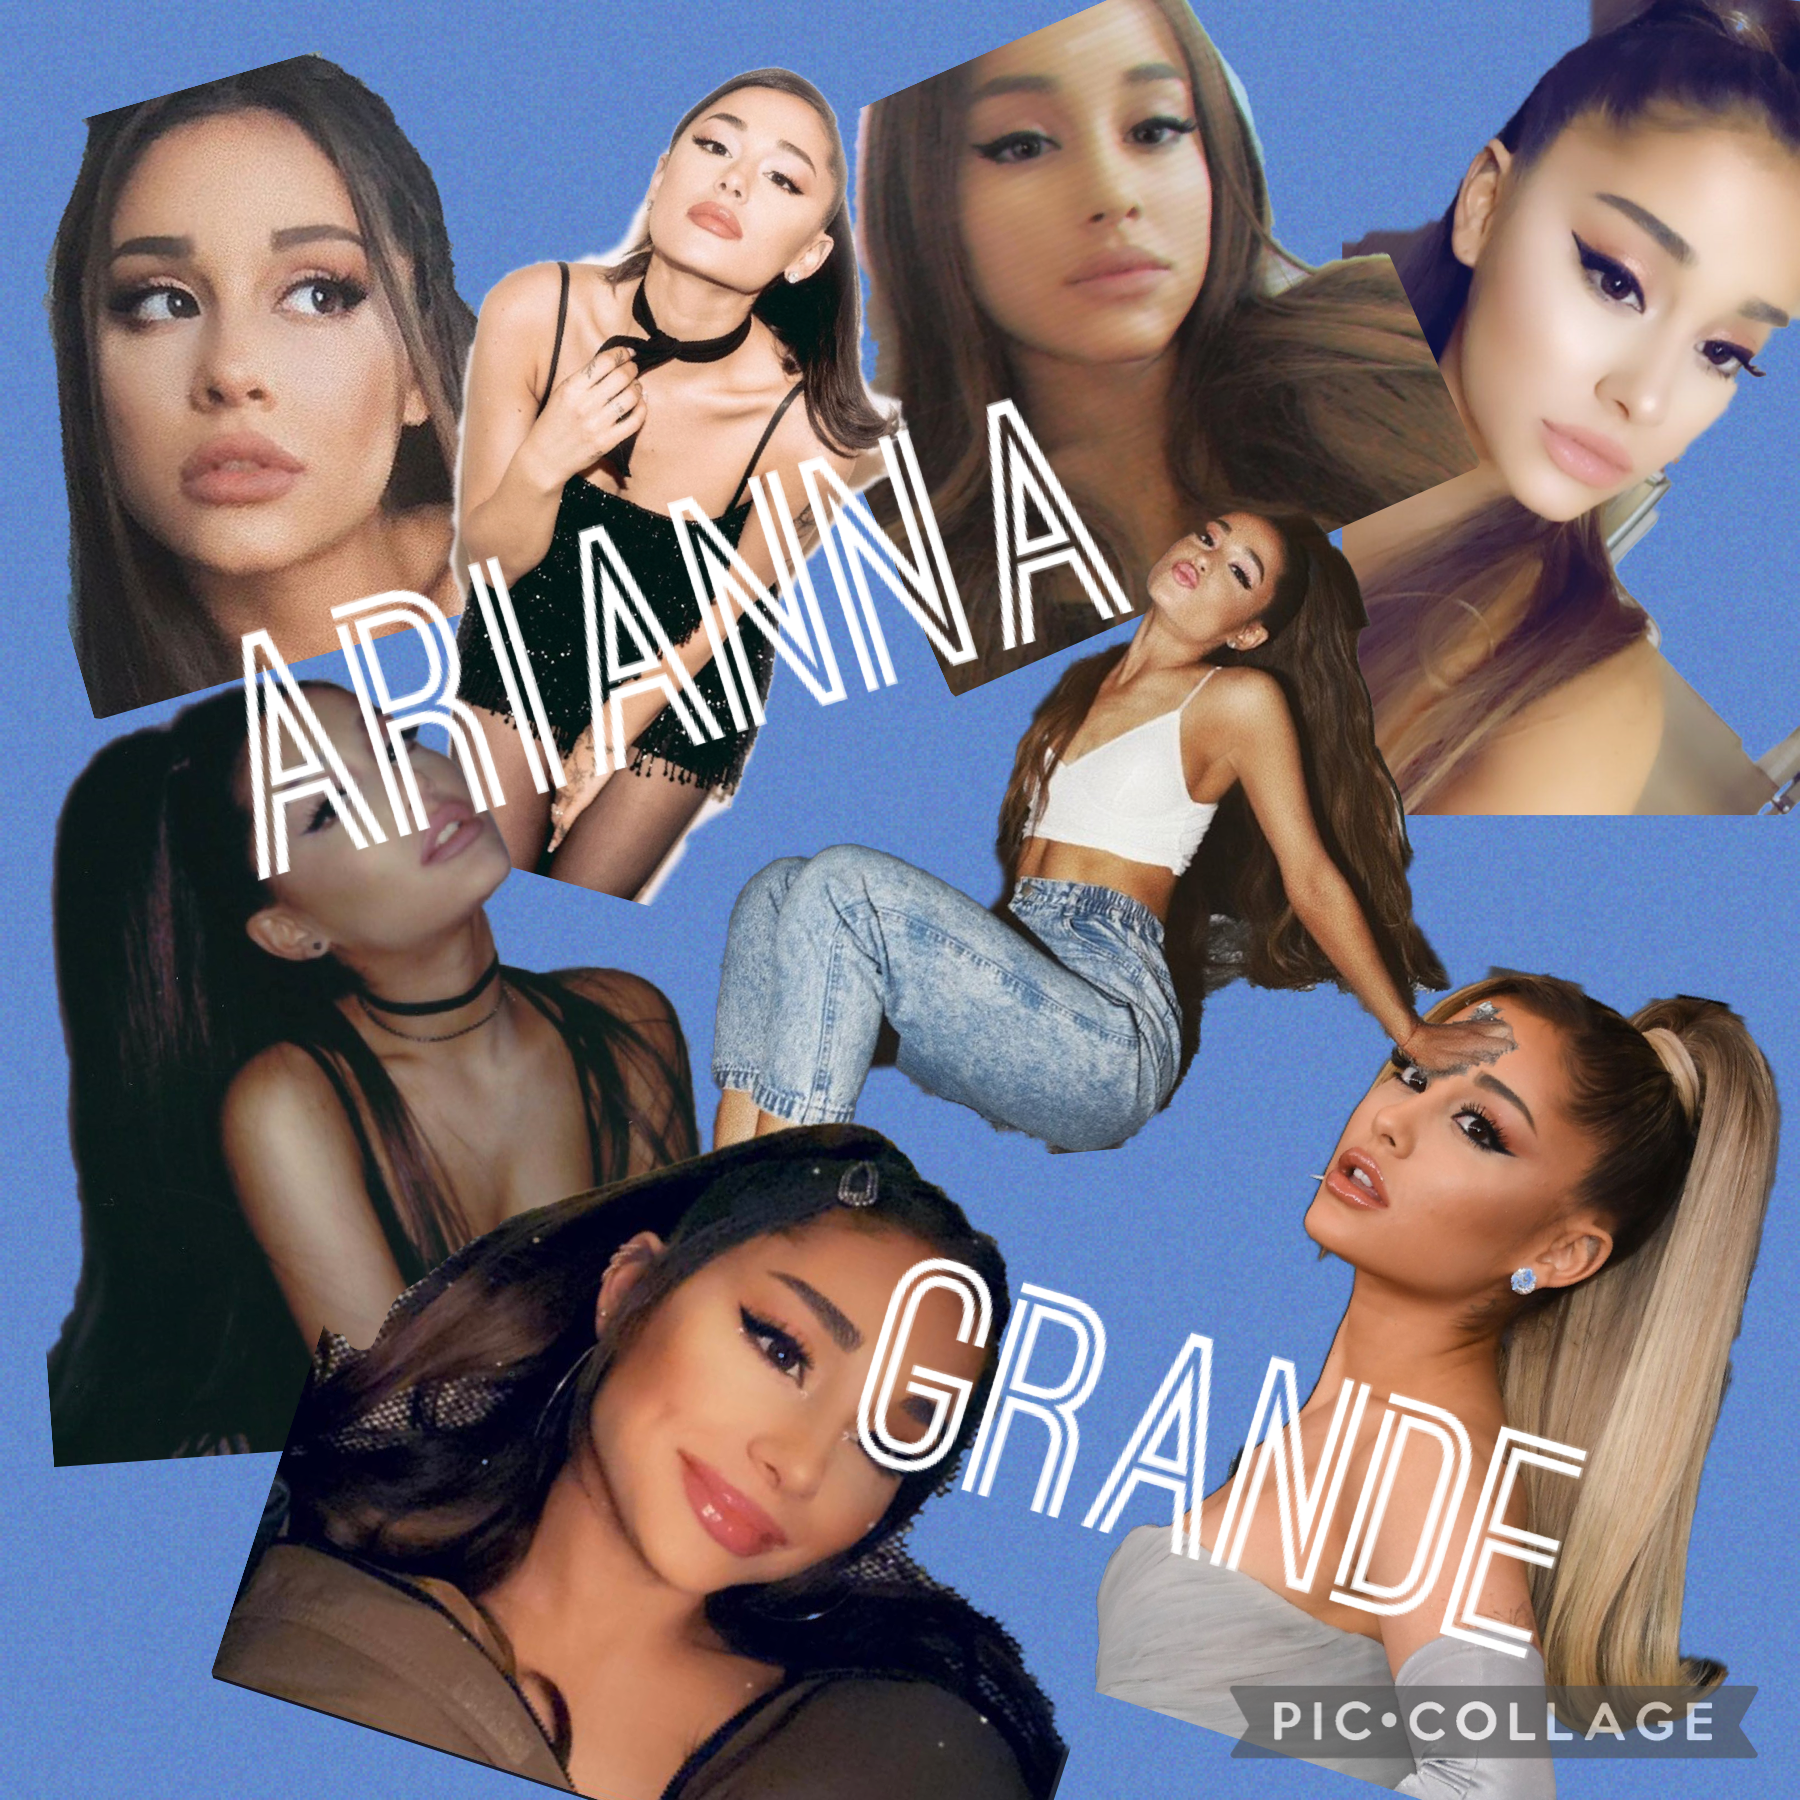 Arianna Grande edit! Hope you like it